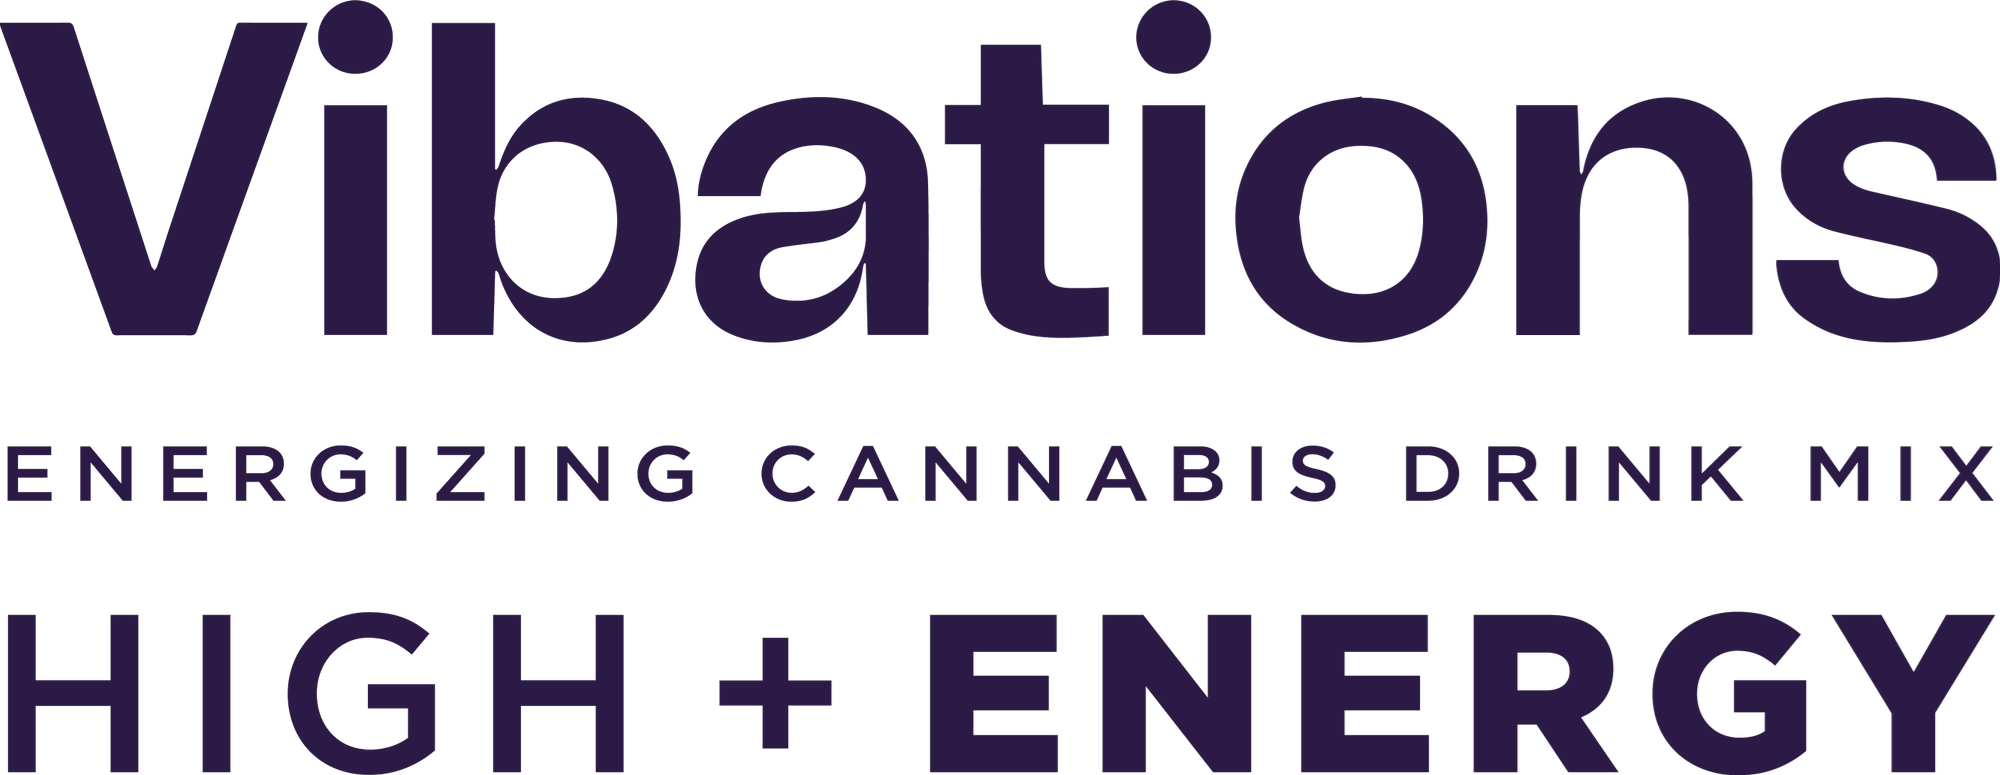 Vibations Cannabis Brand Logo